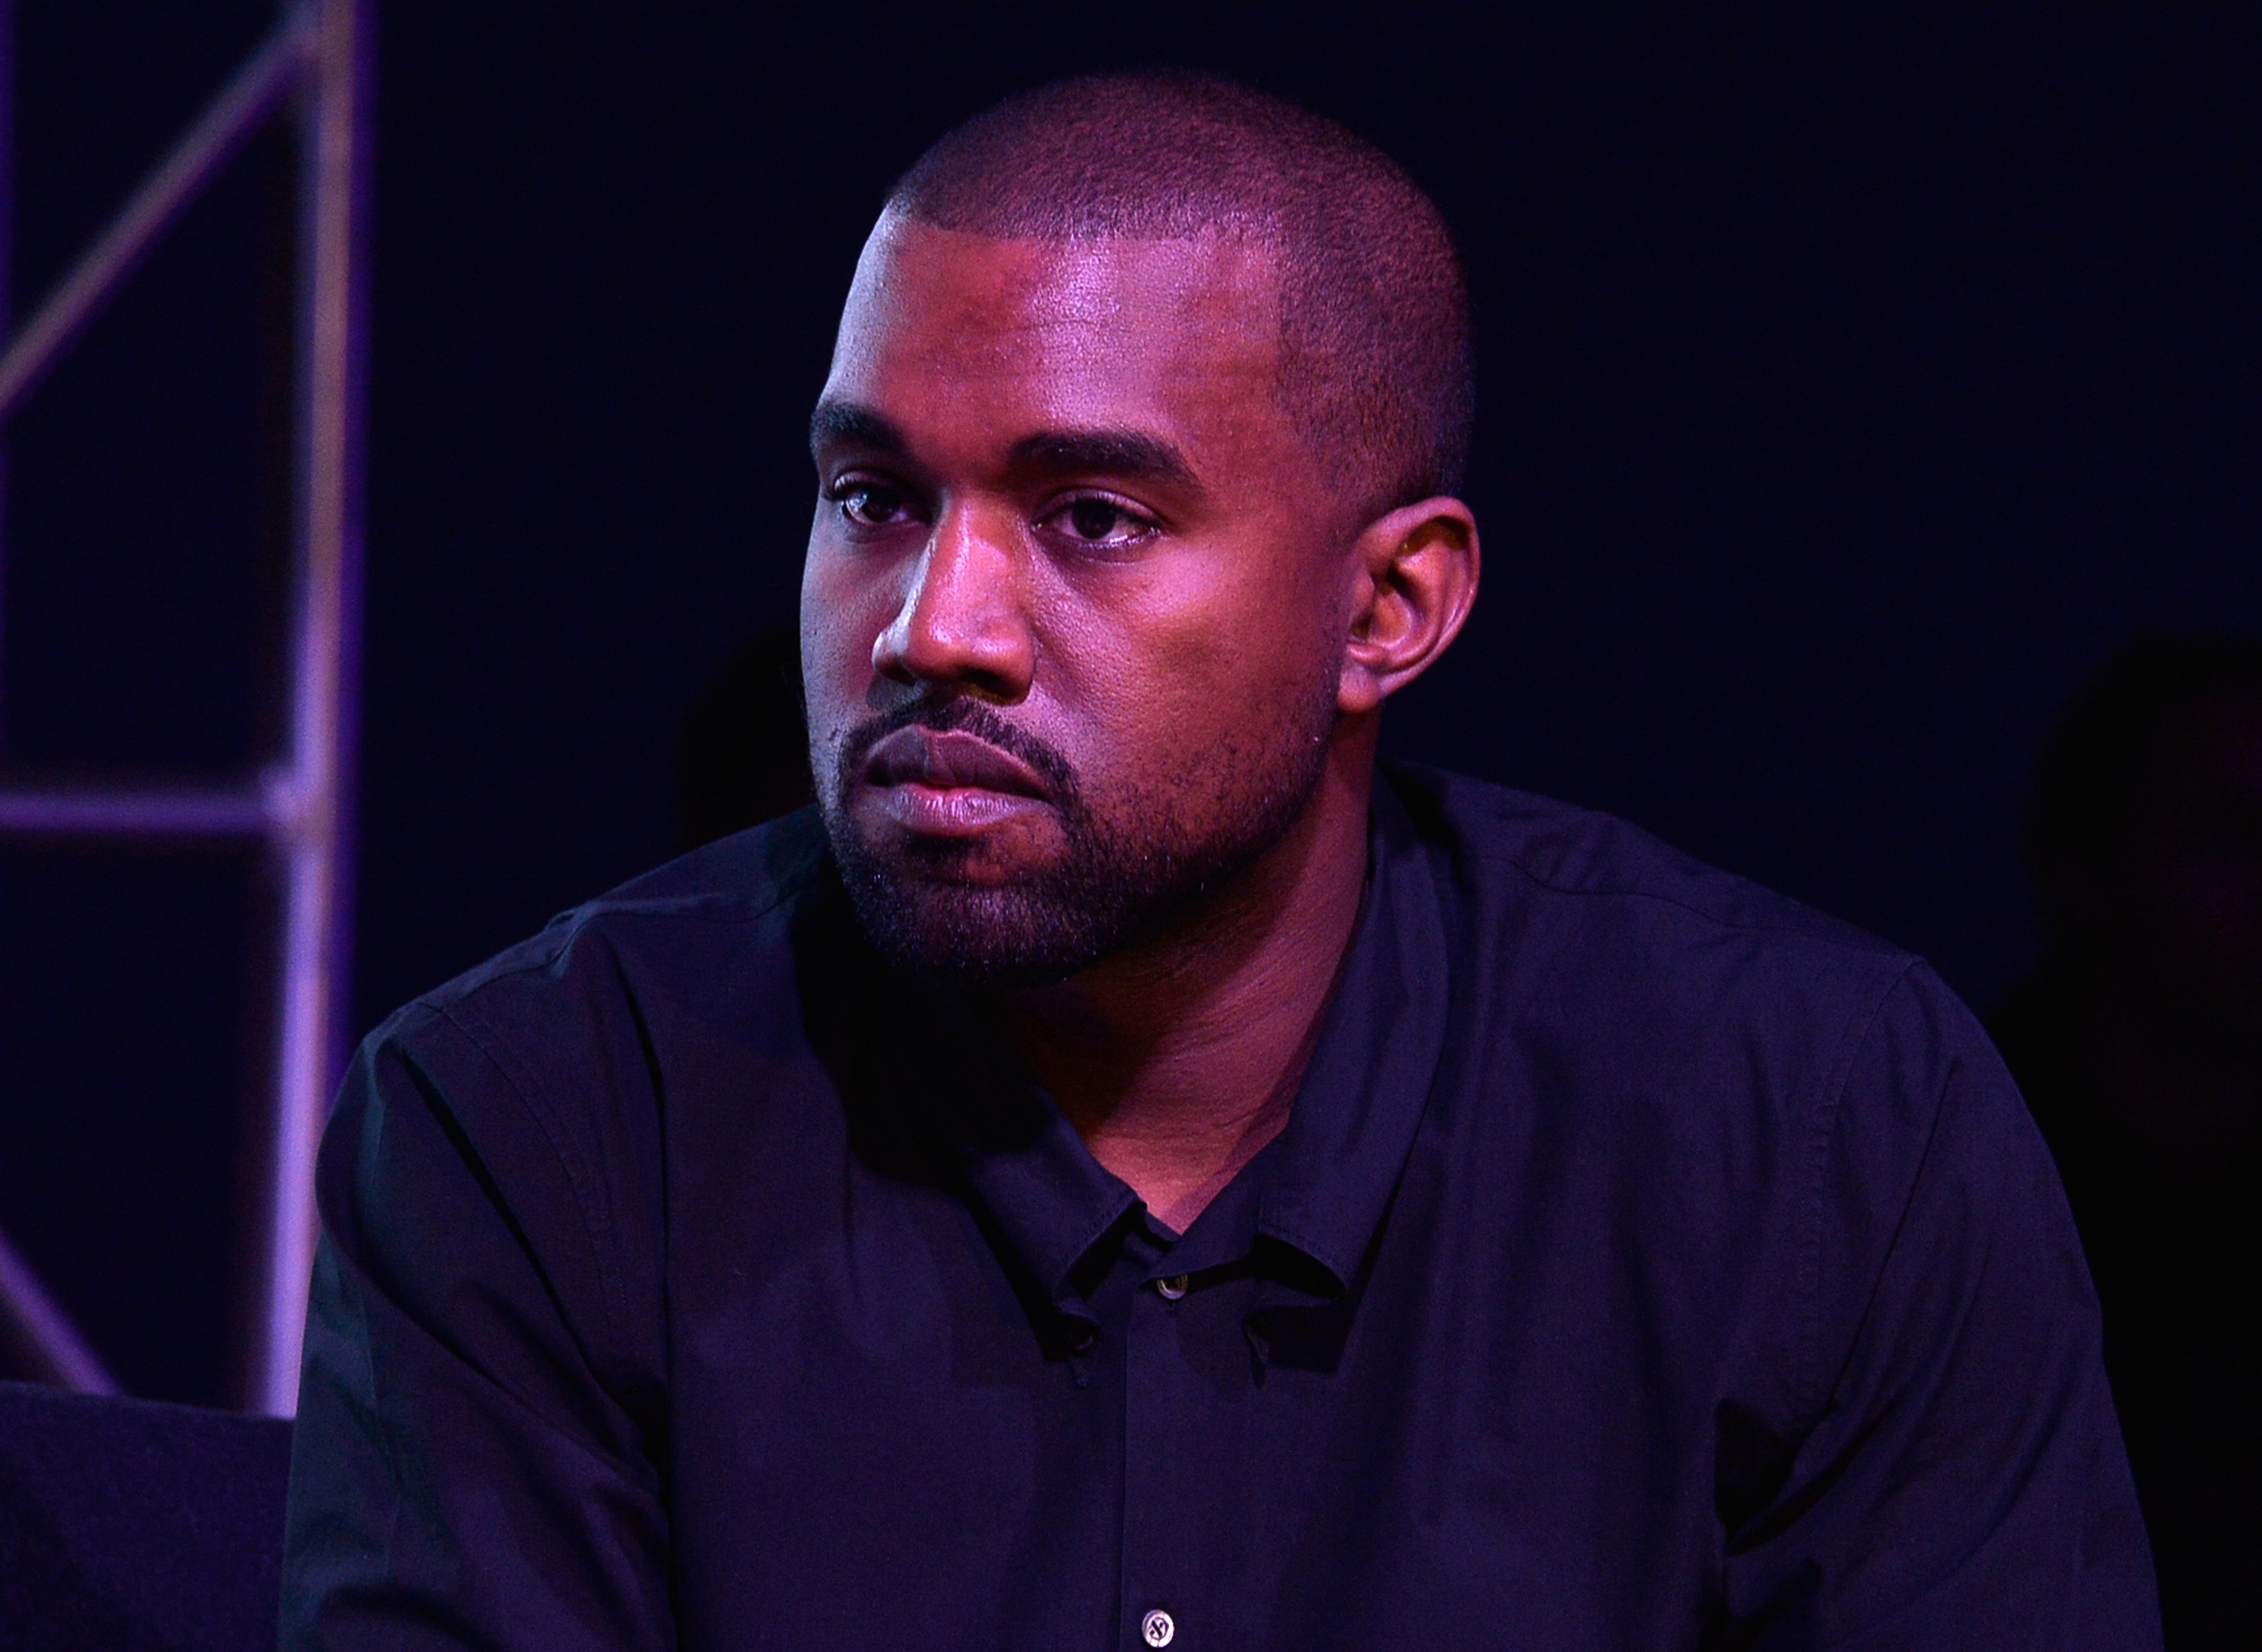 Kanye West wearing a black shirt